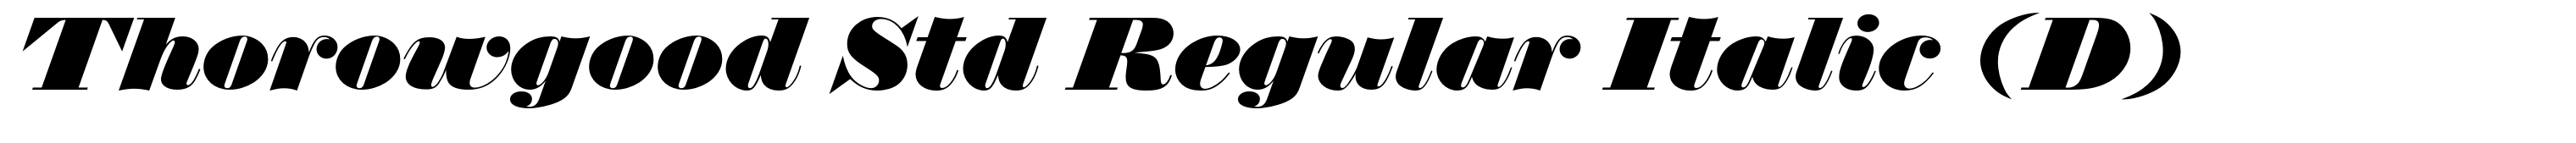 Thorowgood Std Regular Italic (D)